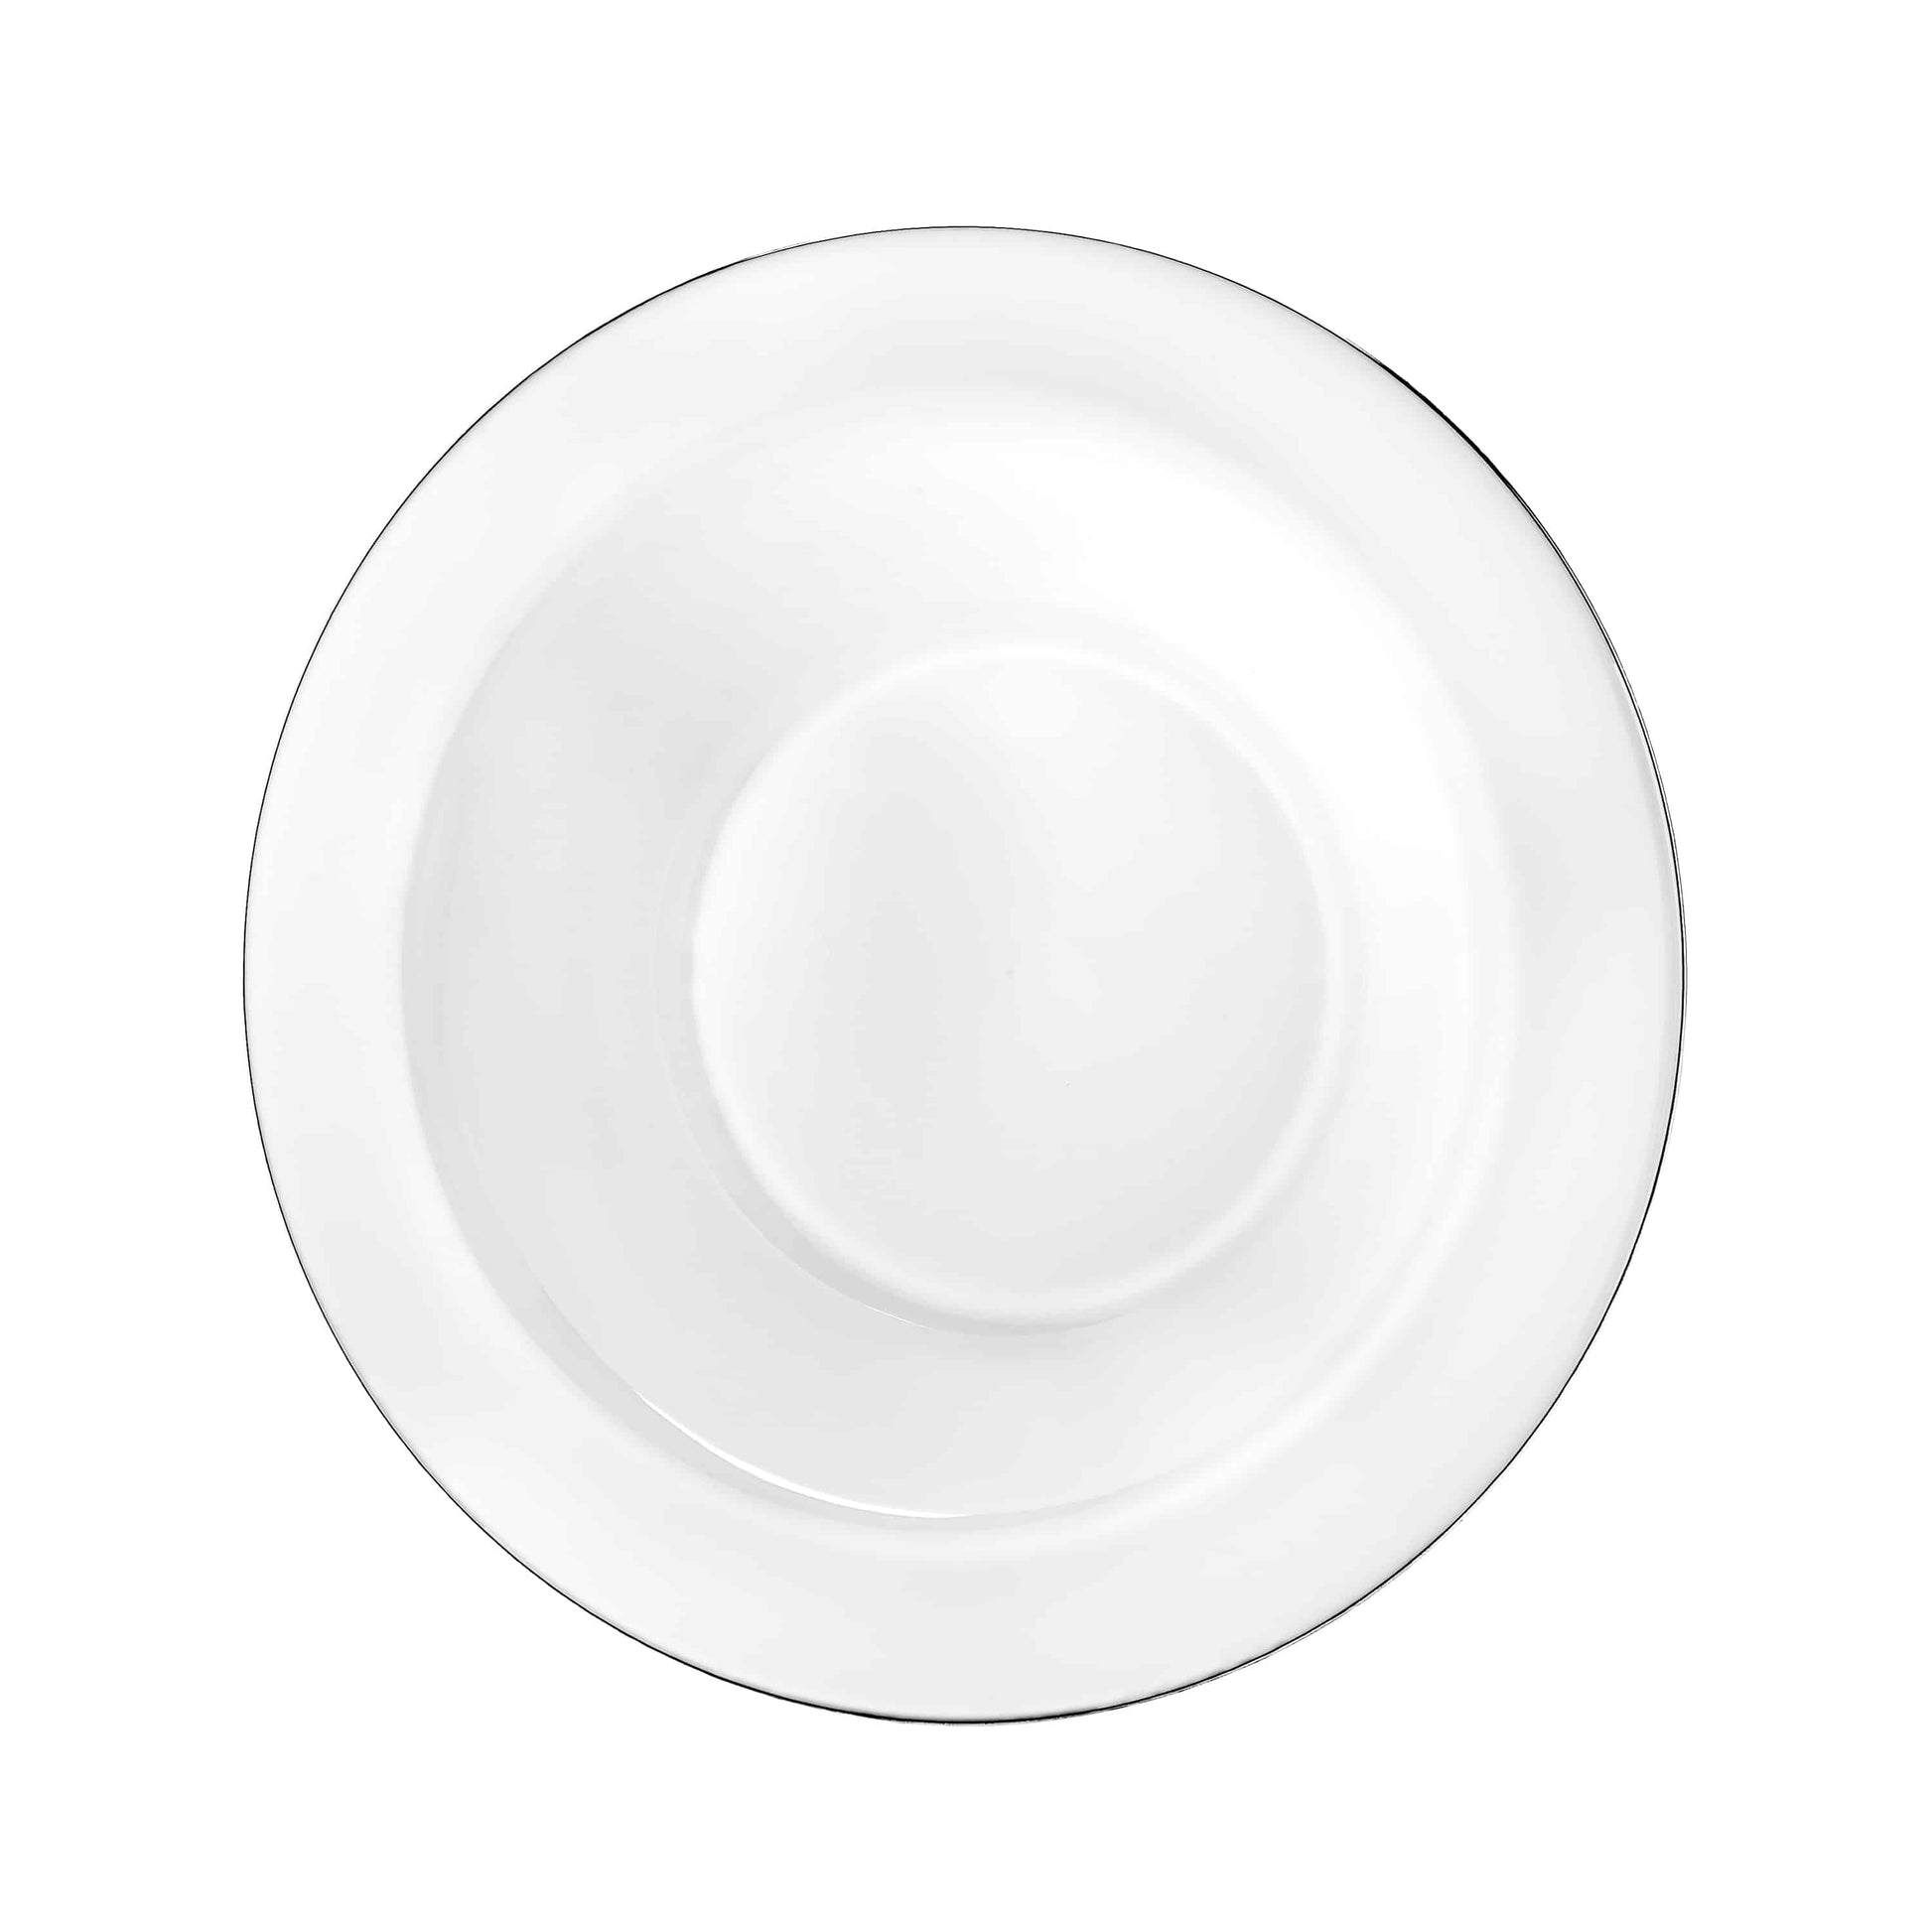 Magnificence Silver Edge Premium Plastic Round Dinnerware - King Zak